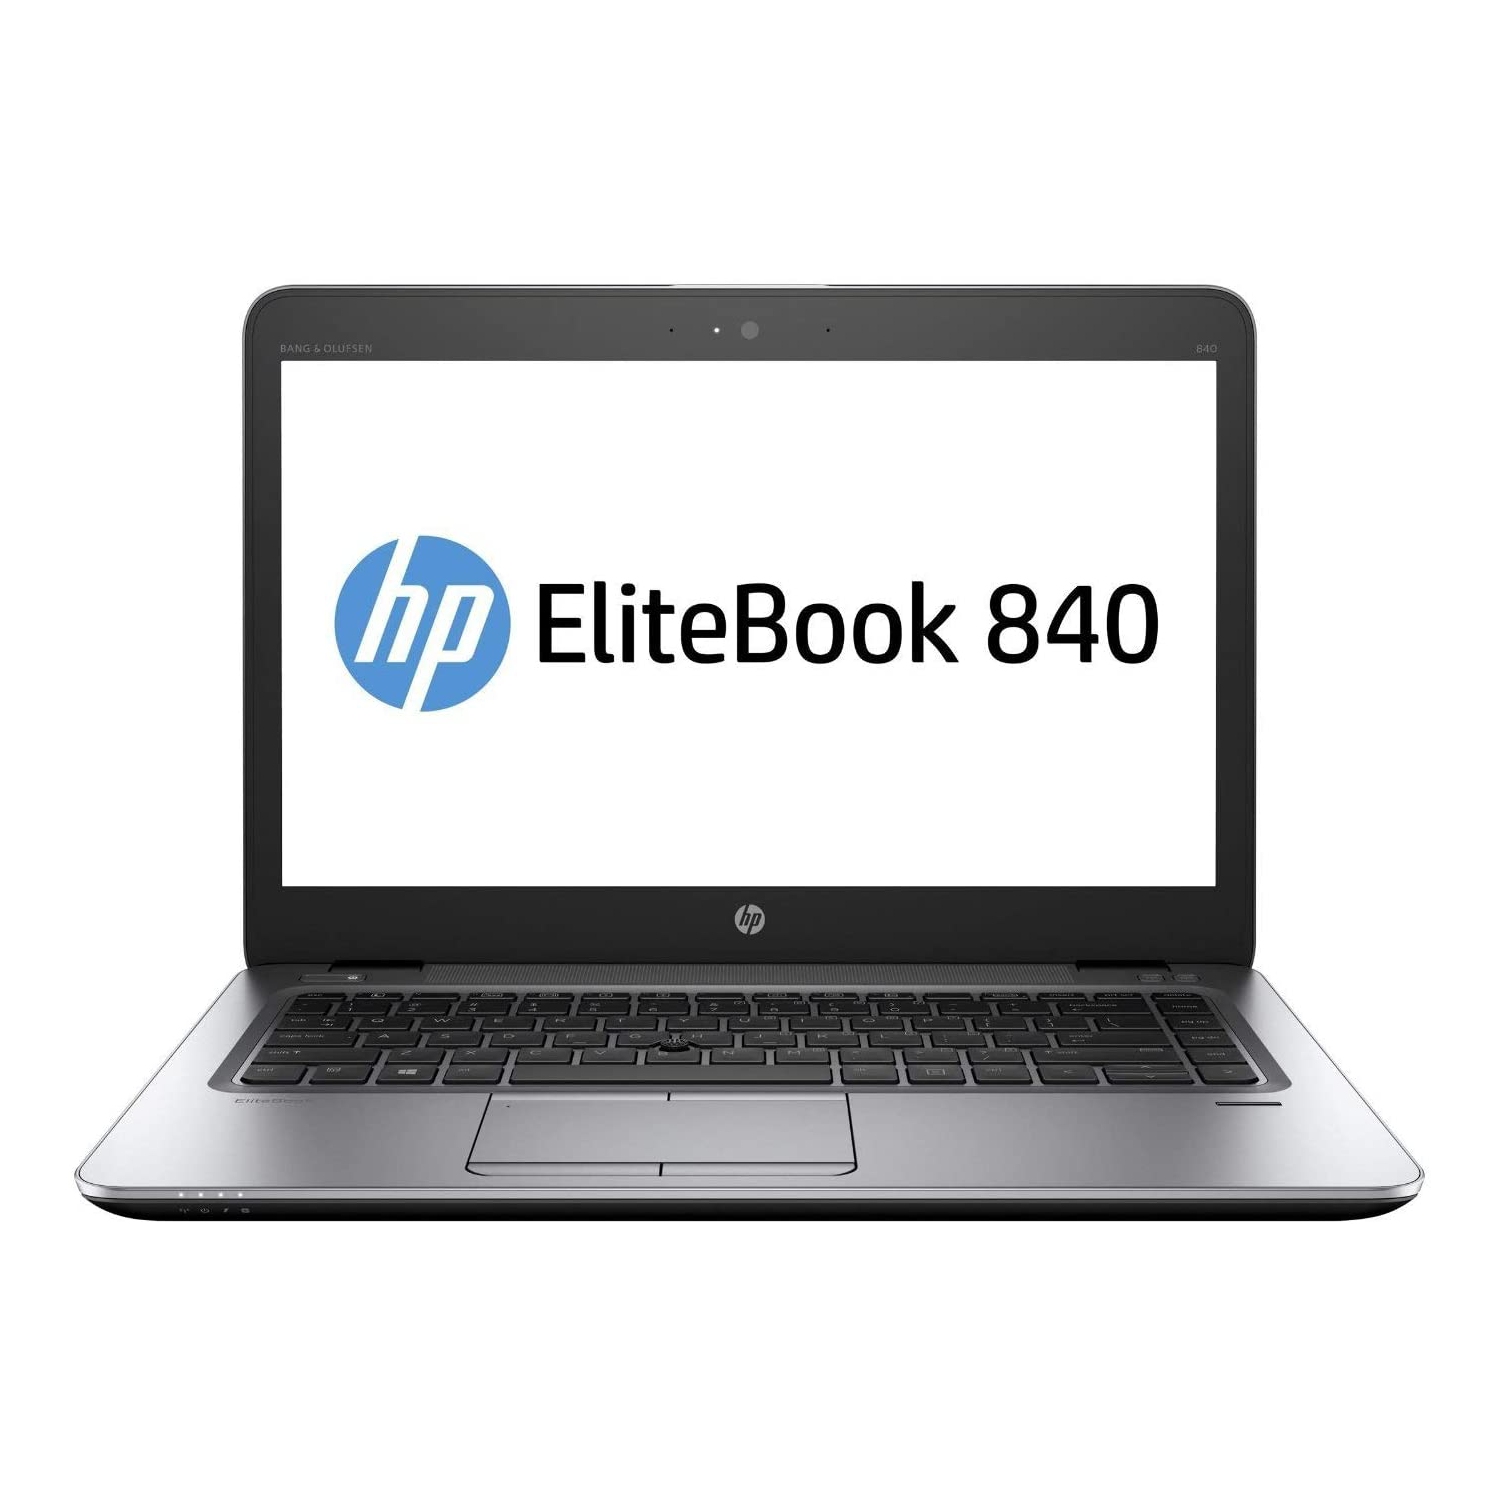 Refurbished (Good) - HP EliteBook 840 G3 Intel Core i5-6300u UP TO 3.0G, 8GB RAM, 500G HD, Windows 10 Pro